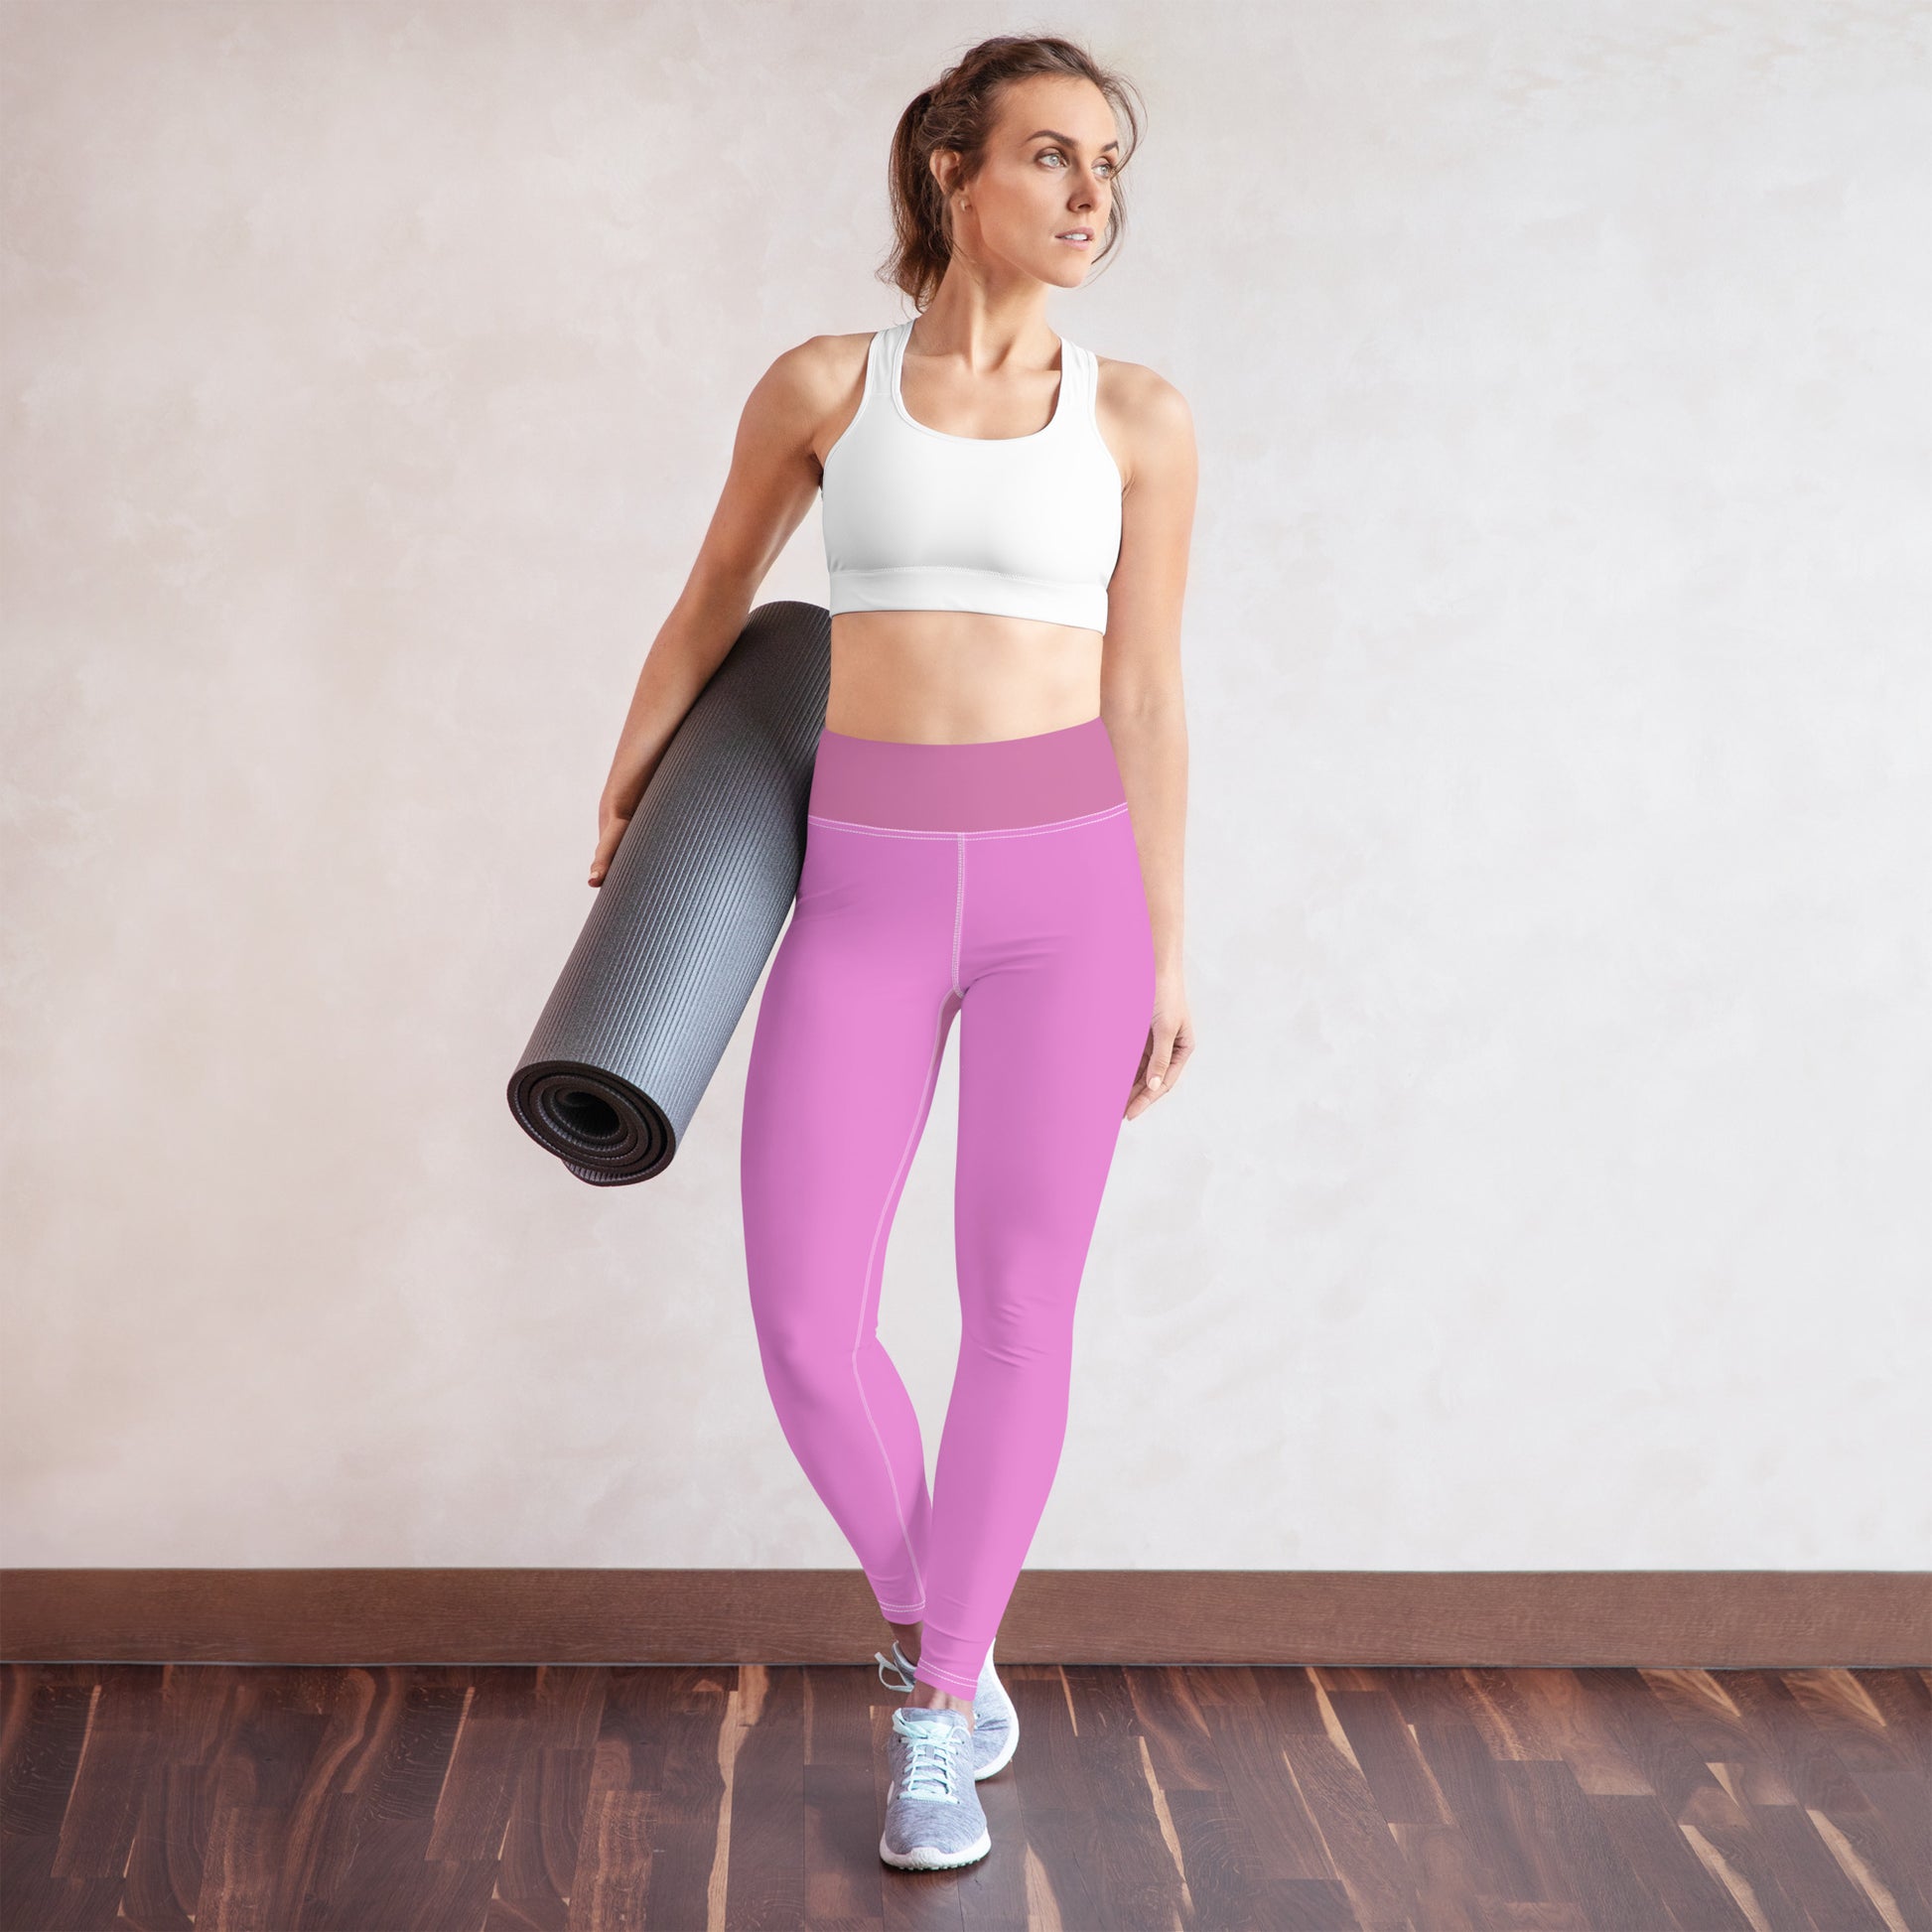 pink yoga leggings, workout leggings, stretchy leggings, moisture-wicking leggings, high-waisted leggings, compression leggings, breathable leggings, non-see-through leggings, seamless leggings, eco-friendly leggings 